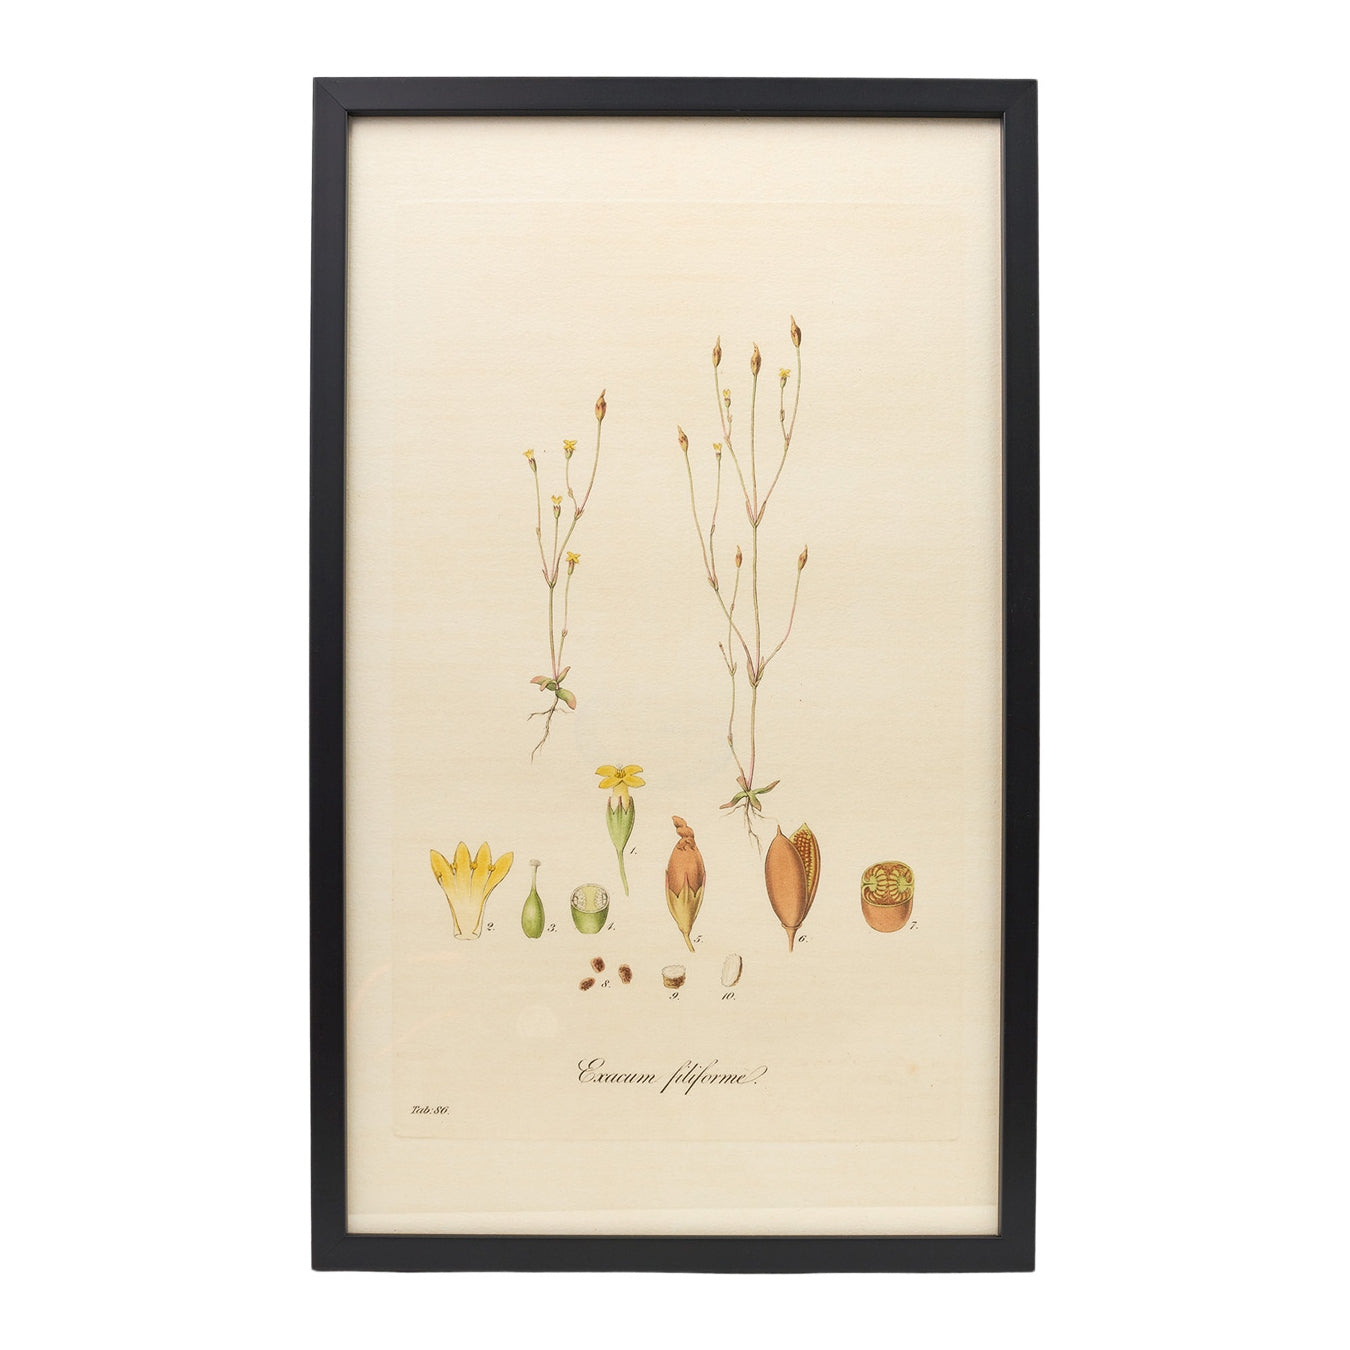 Exacum filiforme ‘Flora Londinensis’ Botanical Print - Framed